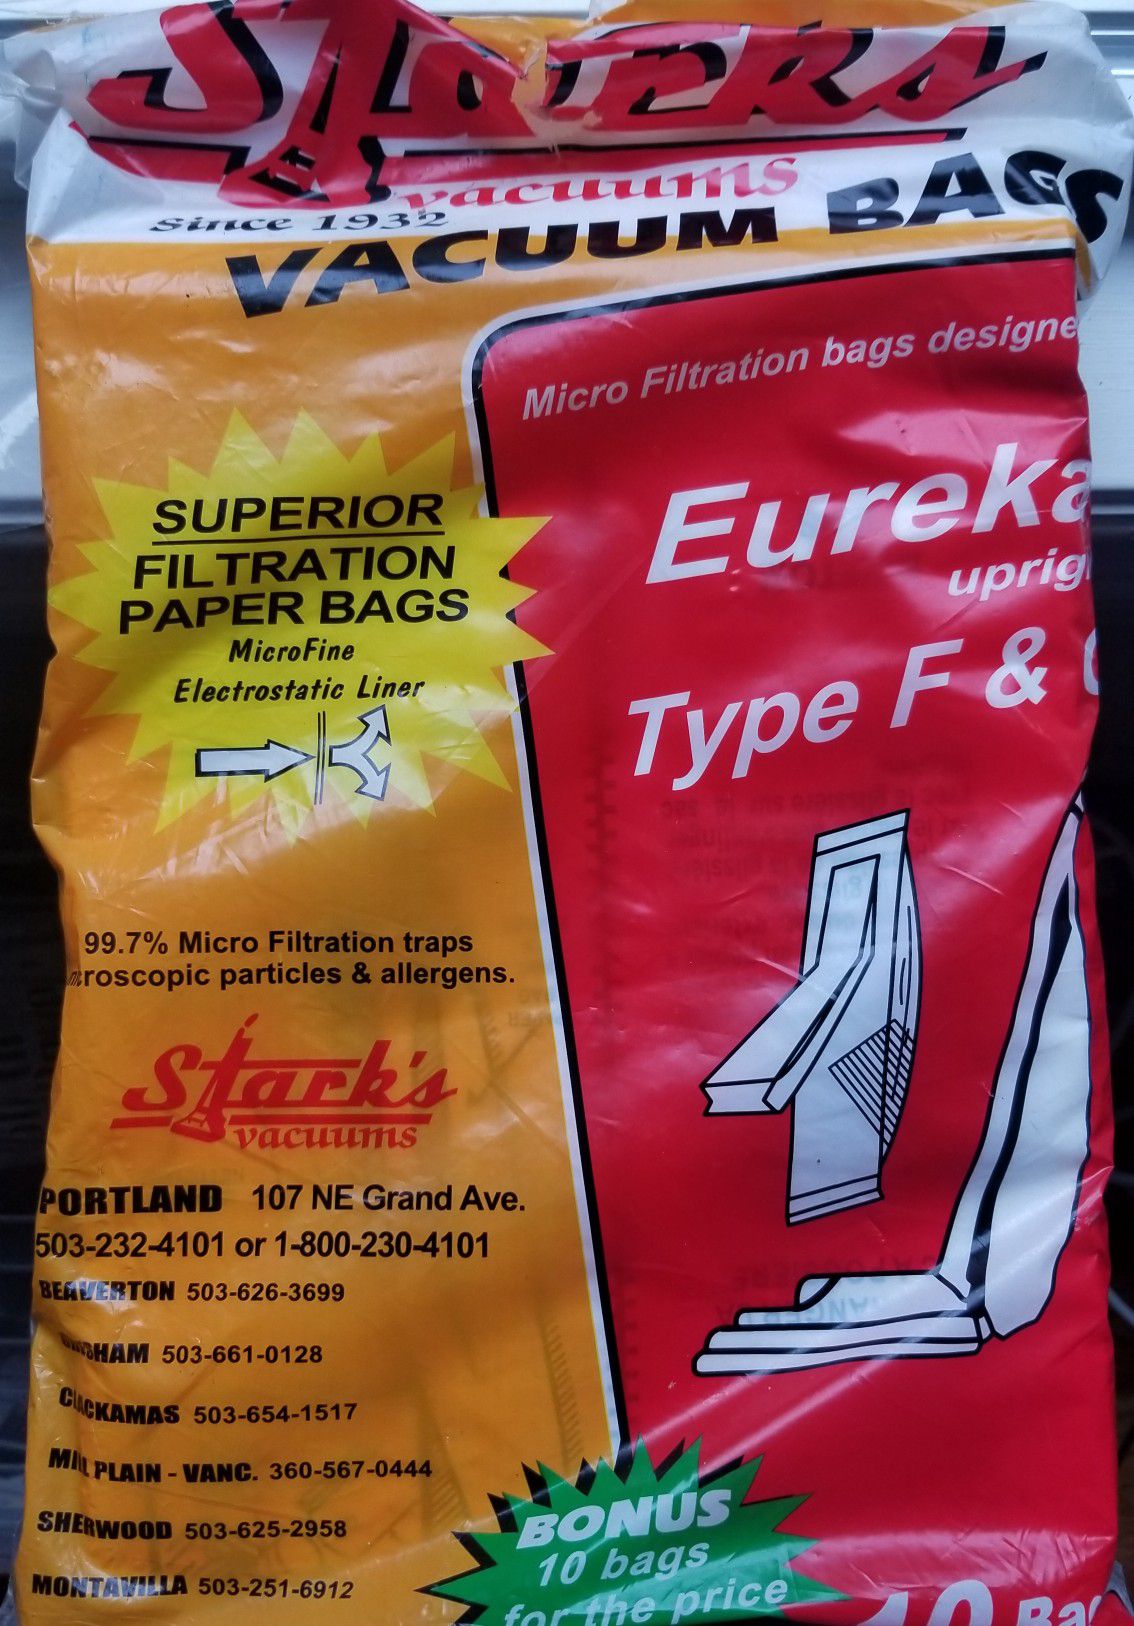 18 new, unused Eureka upright Type F & G Starks Vaccum Bags